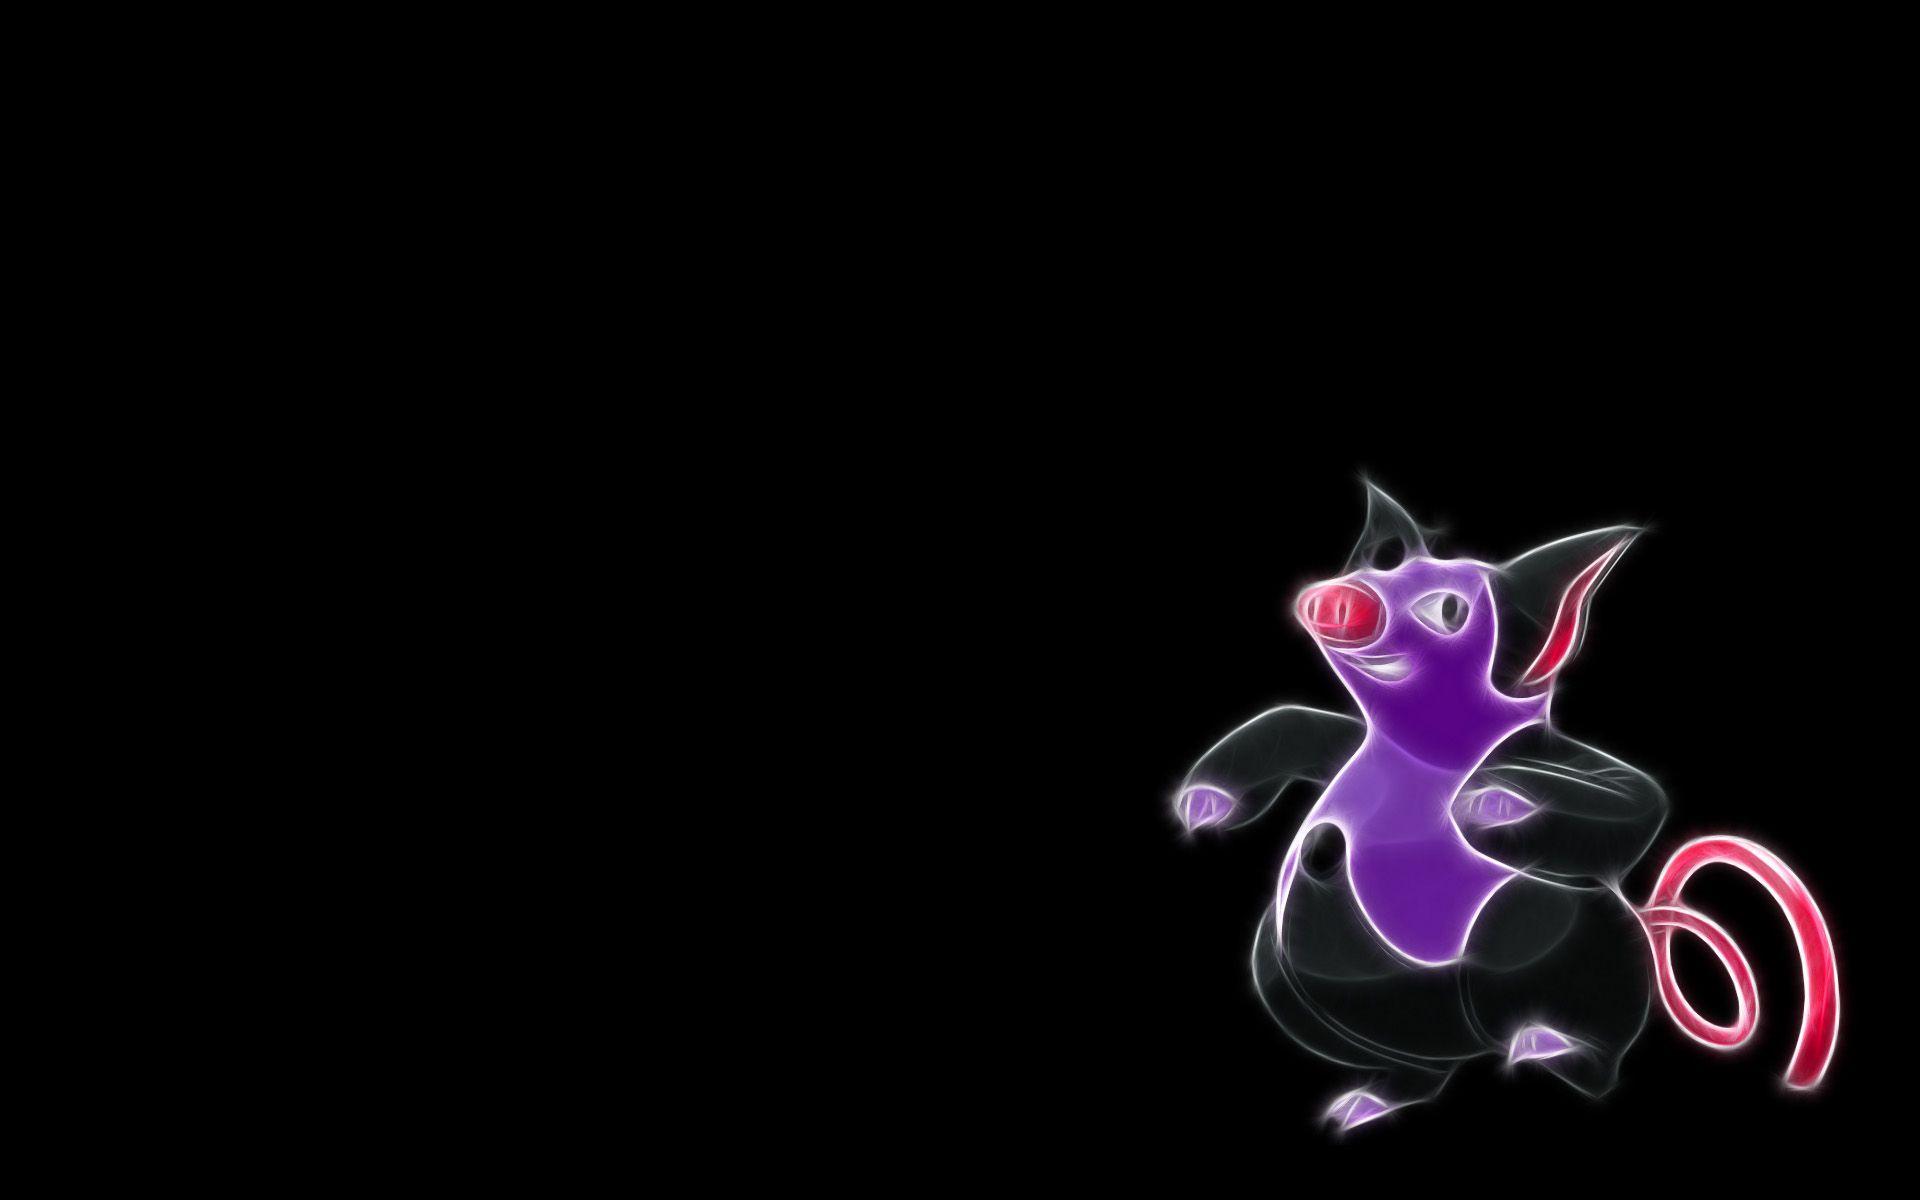 Grumpig (Pokémon) HD Wallpaper and Background Image